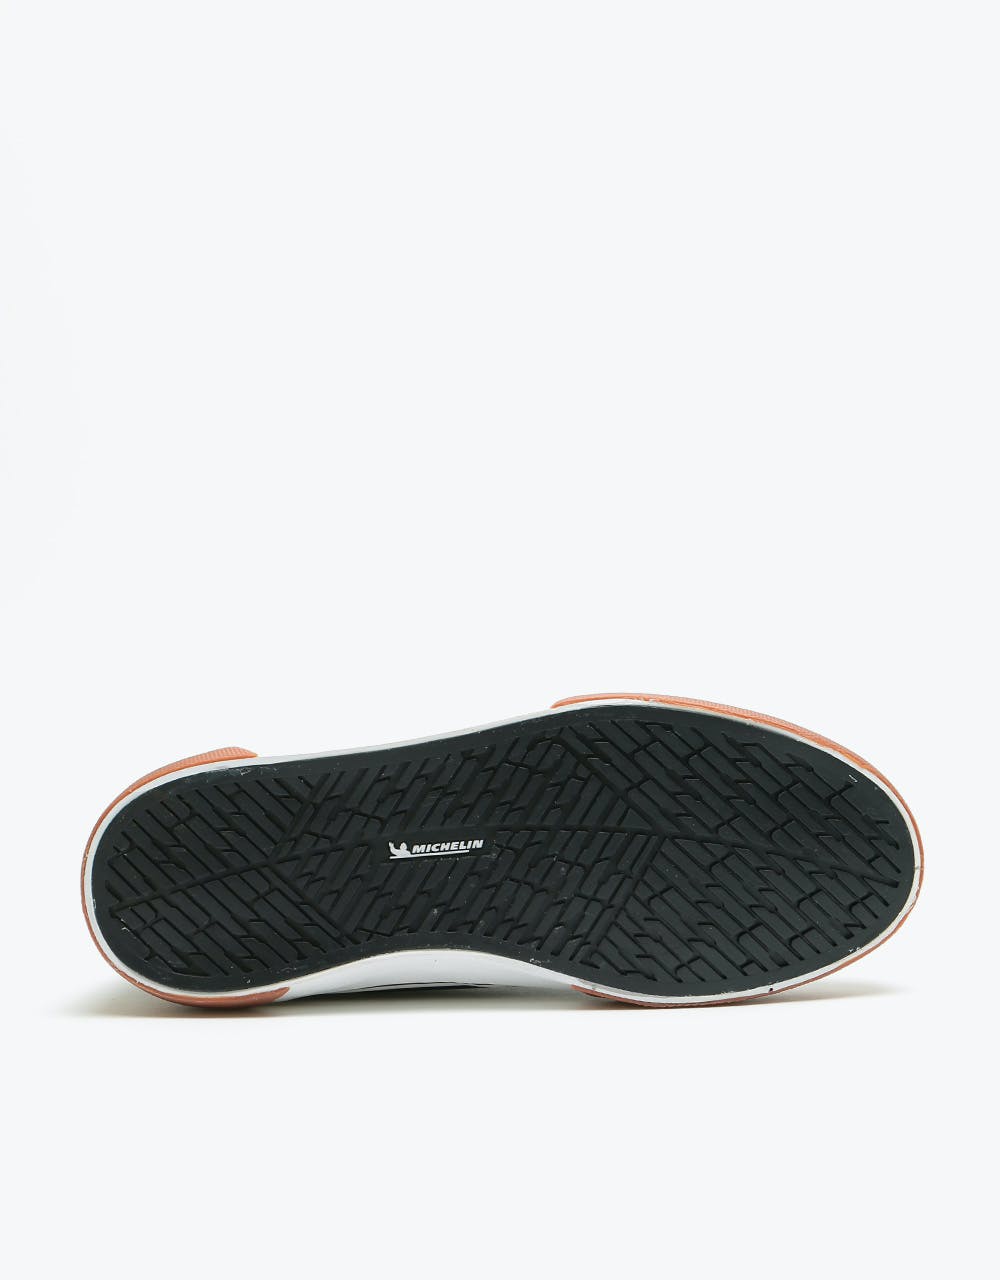 Etnies x Michelin Joslin Vulc Skate Shoes - Navy/Gum/White